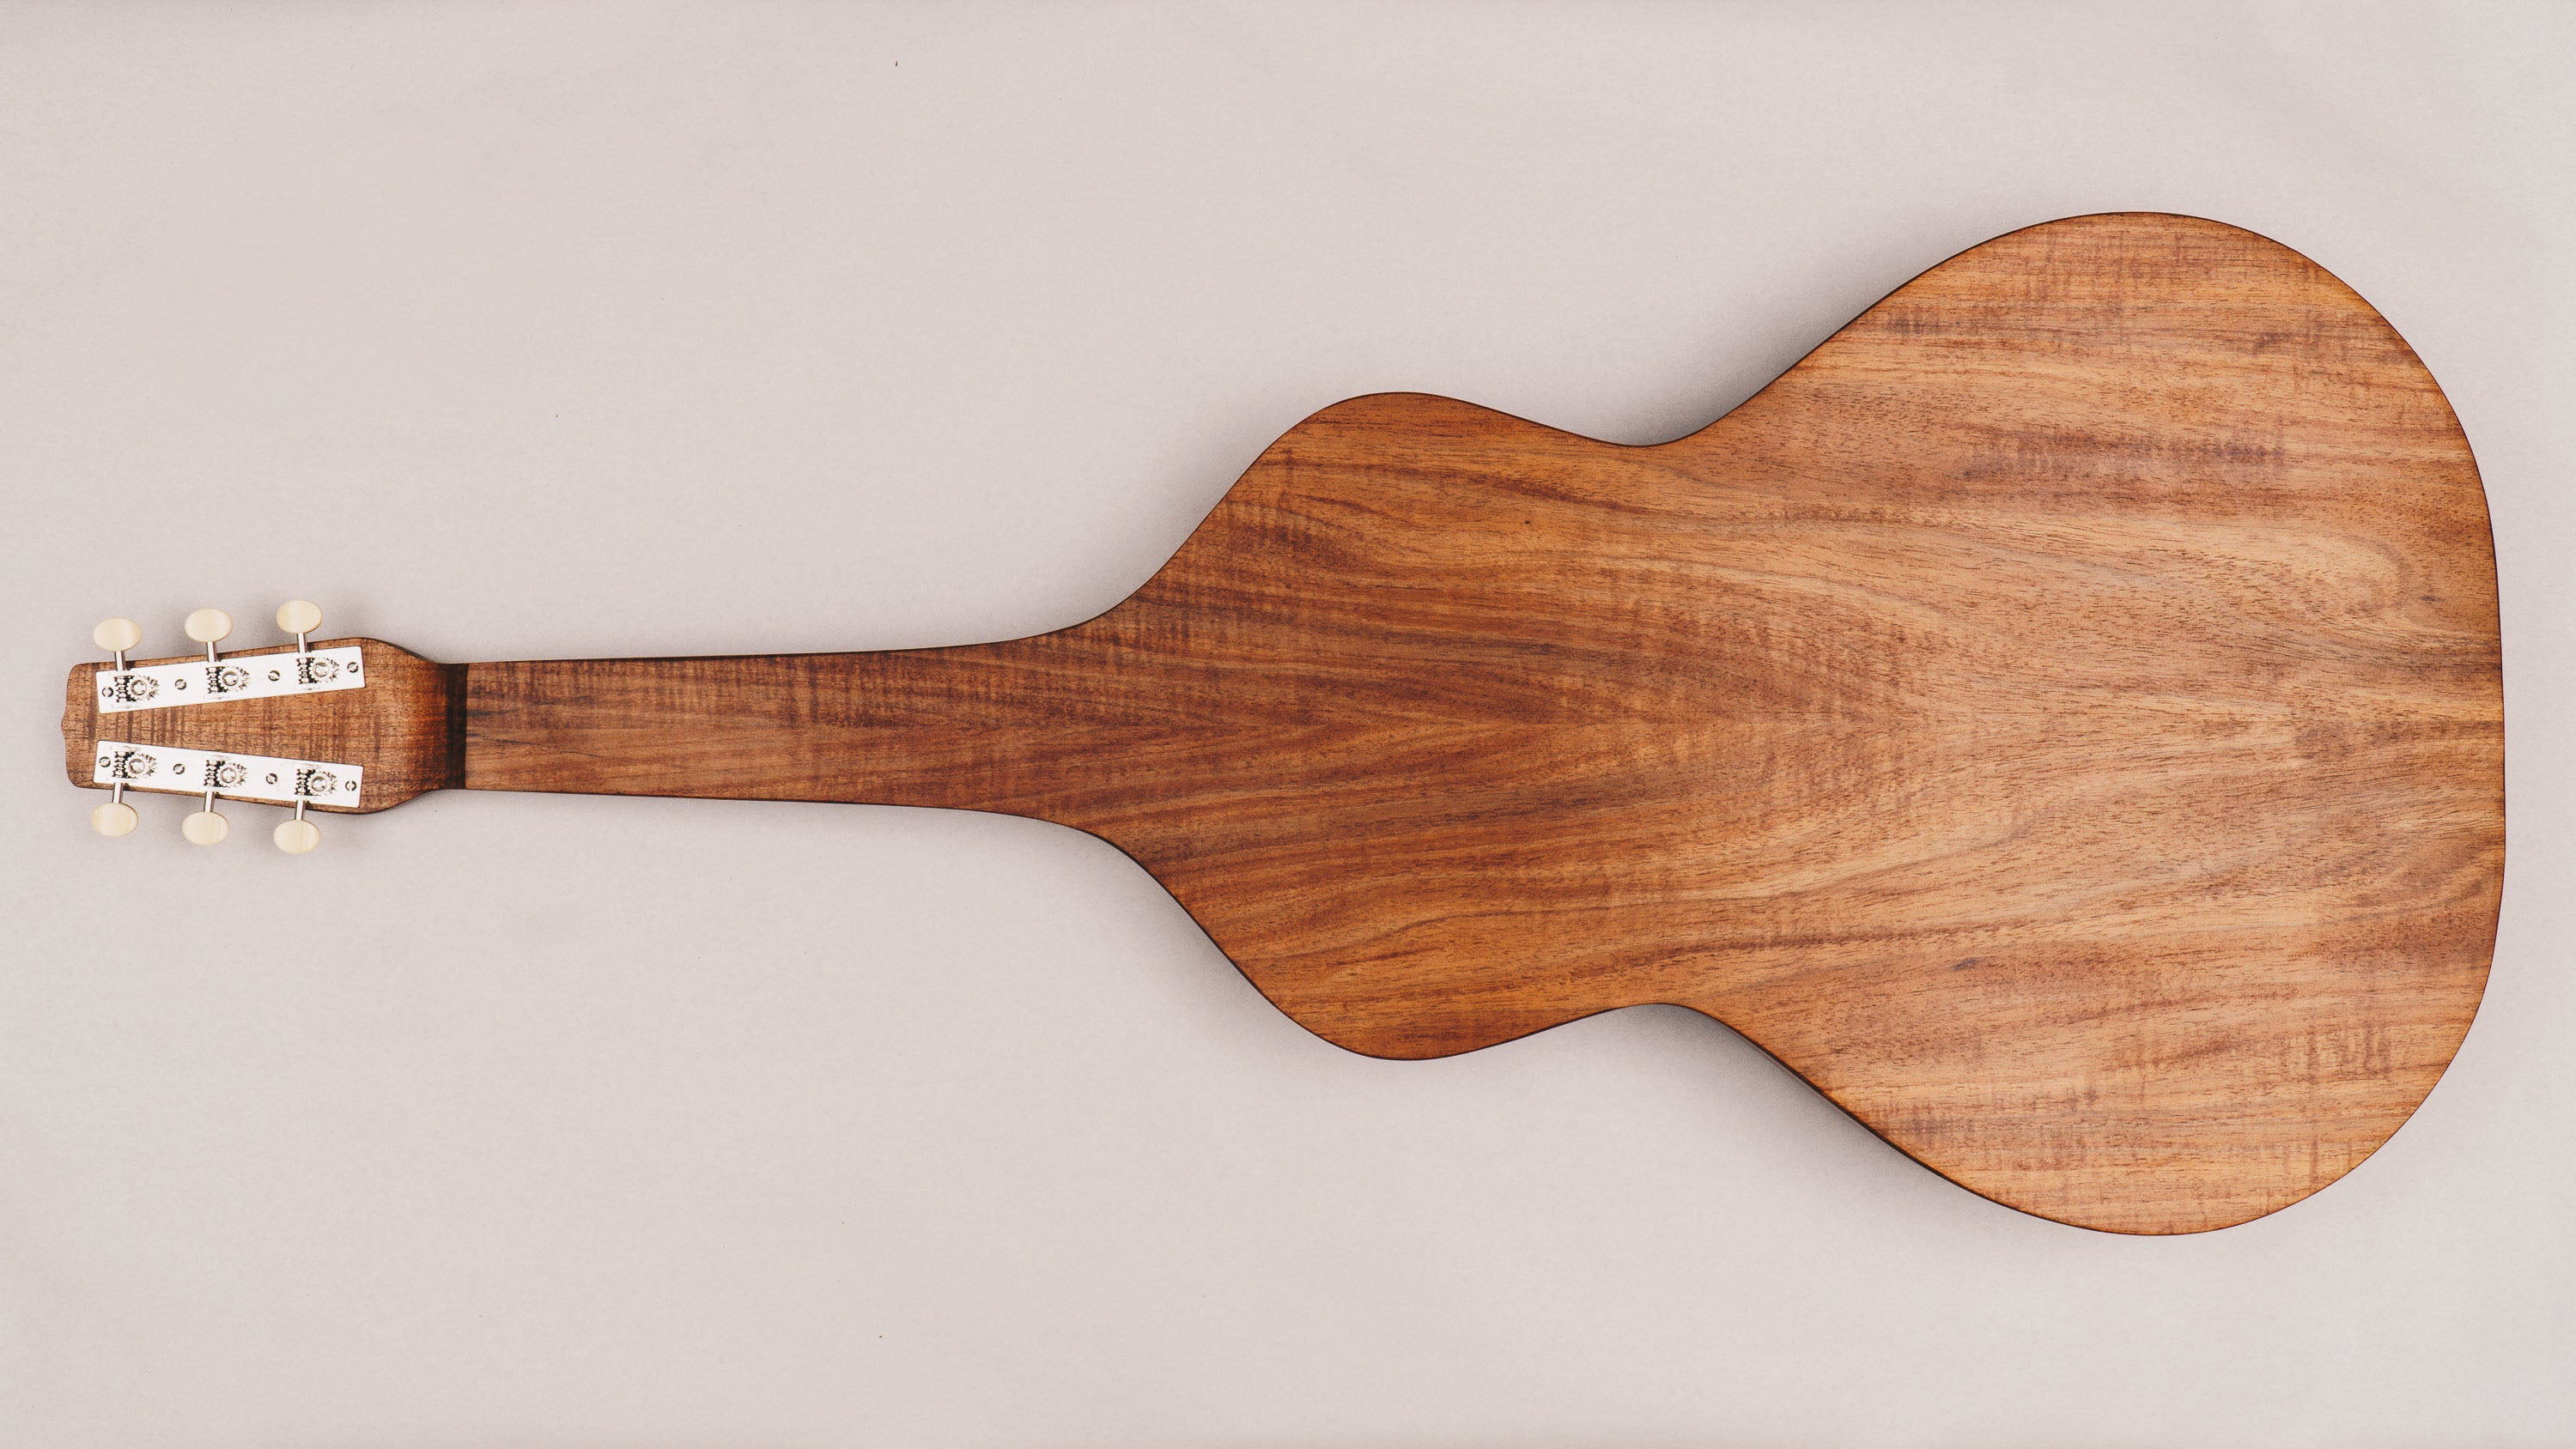 Tasmanian Blackwood Style 1 Weissenborn Acoustic Lap Steel Slide Guitar by master luthier Richard Wilson. Handcrafted in Australia. Serial no. RW1918-238.